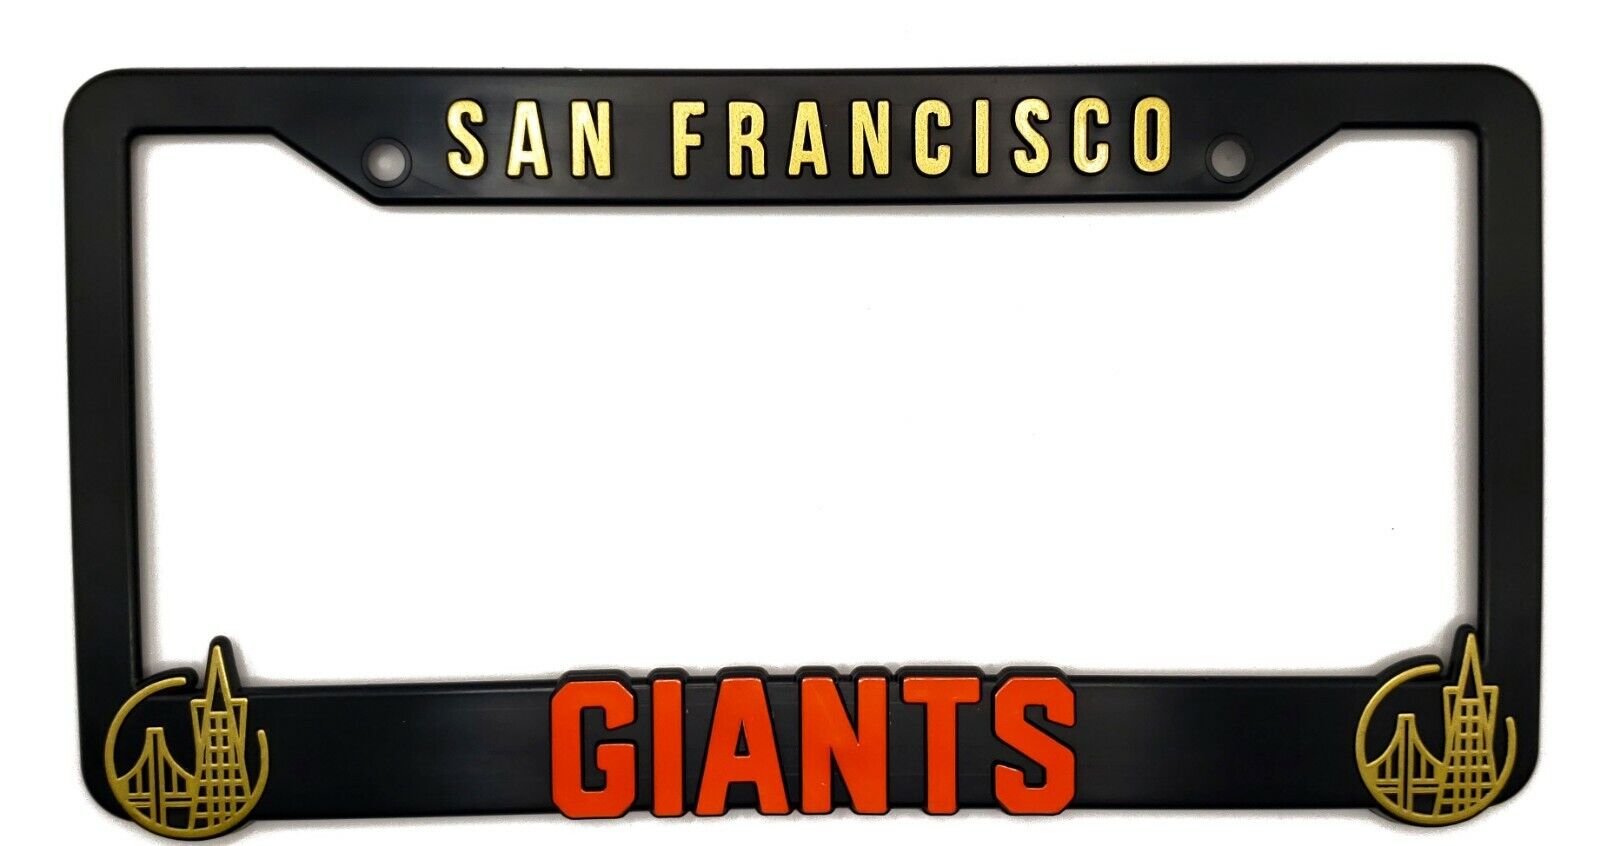 San Francisco Giants 3D Raised License Plate Frame